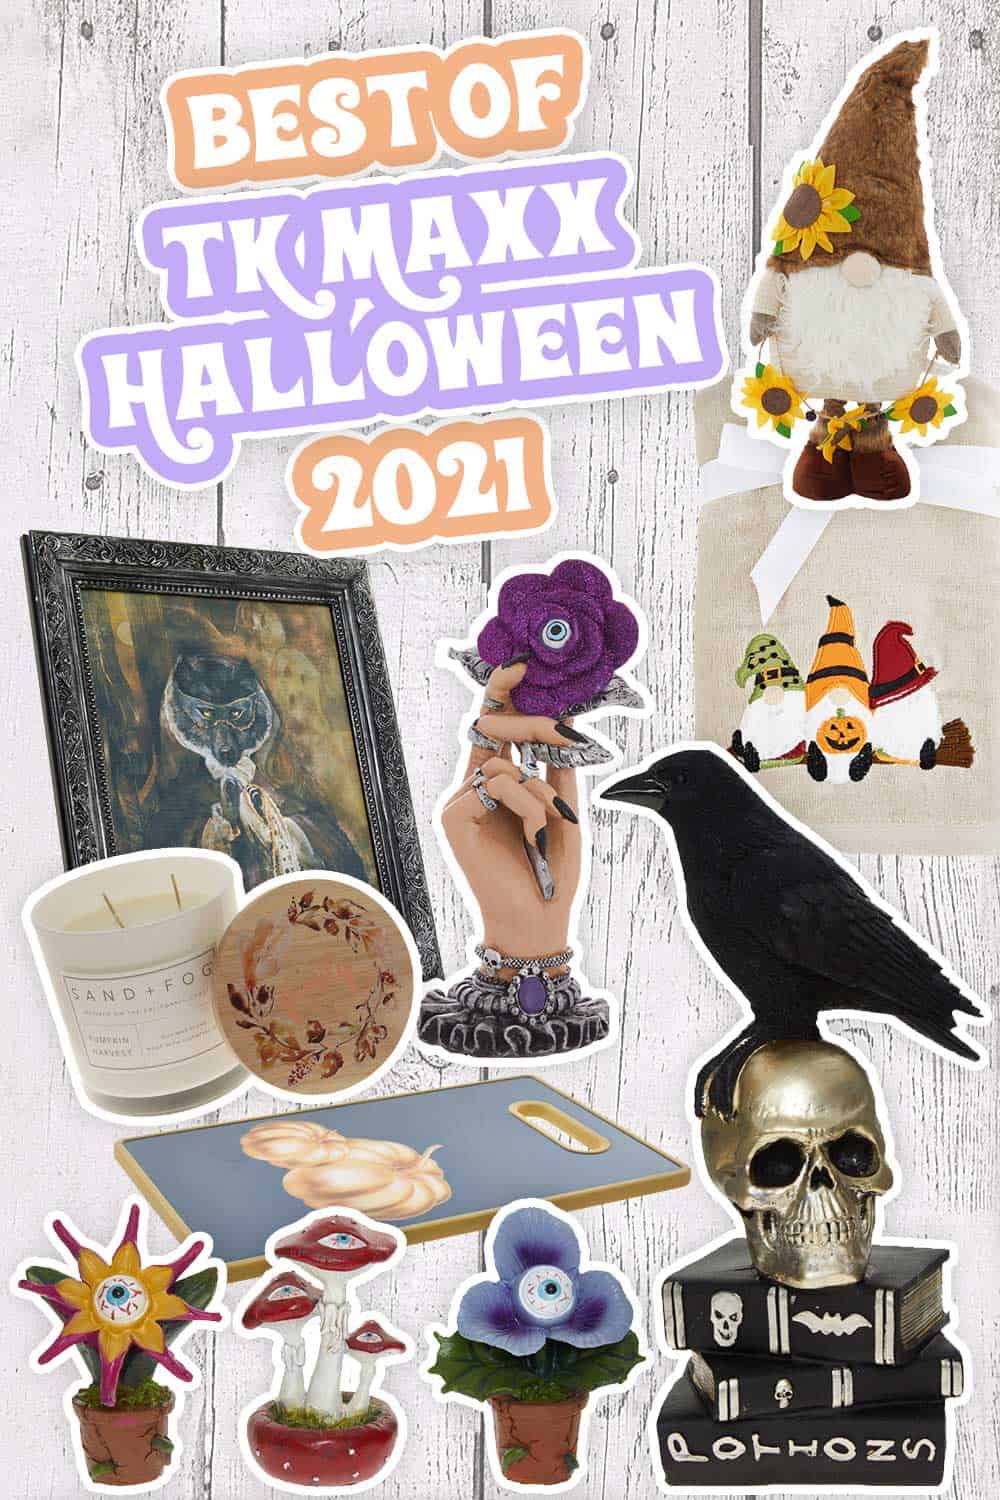 TK Maxx Halloween 2021 Gift Guide